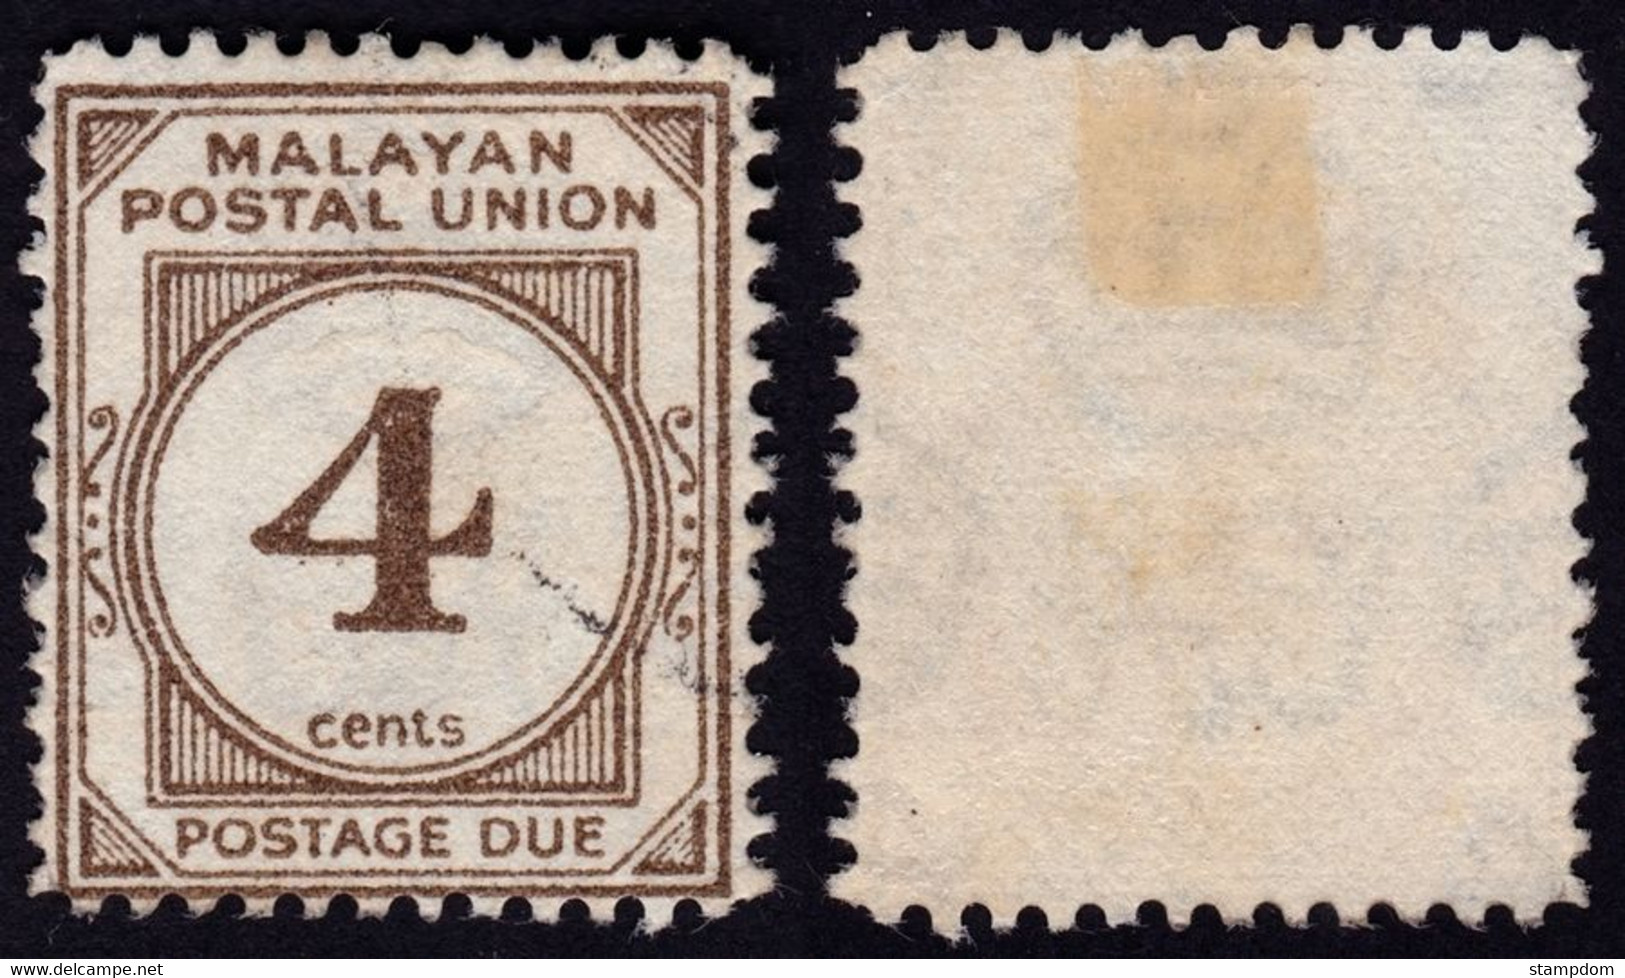 MLAYAN POSTAL UNION 1962 4c Postage Due P12.5 Sc#J23a - USED @E709 - Malayan Postal Union